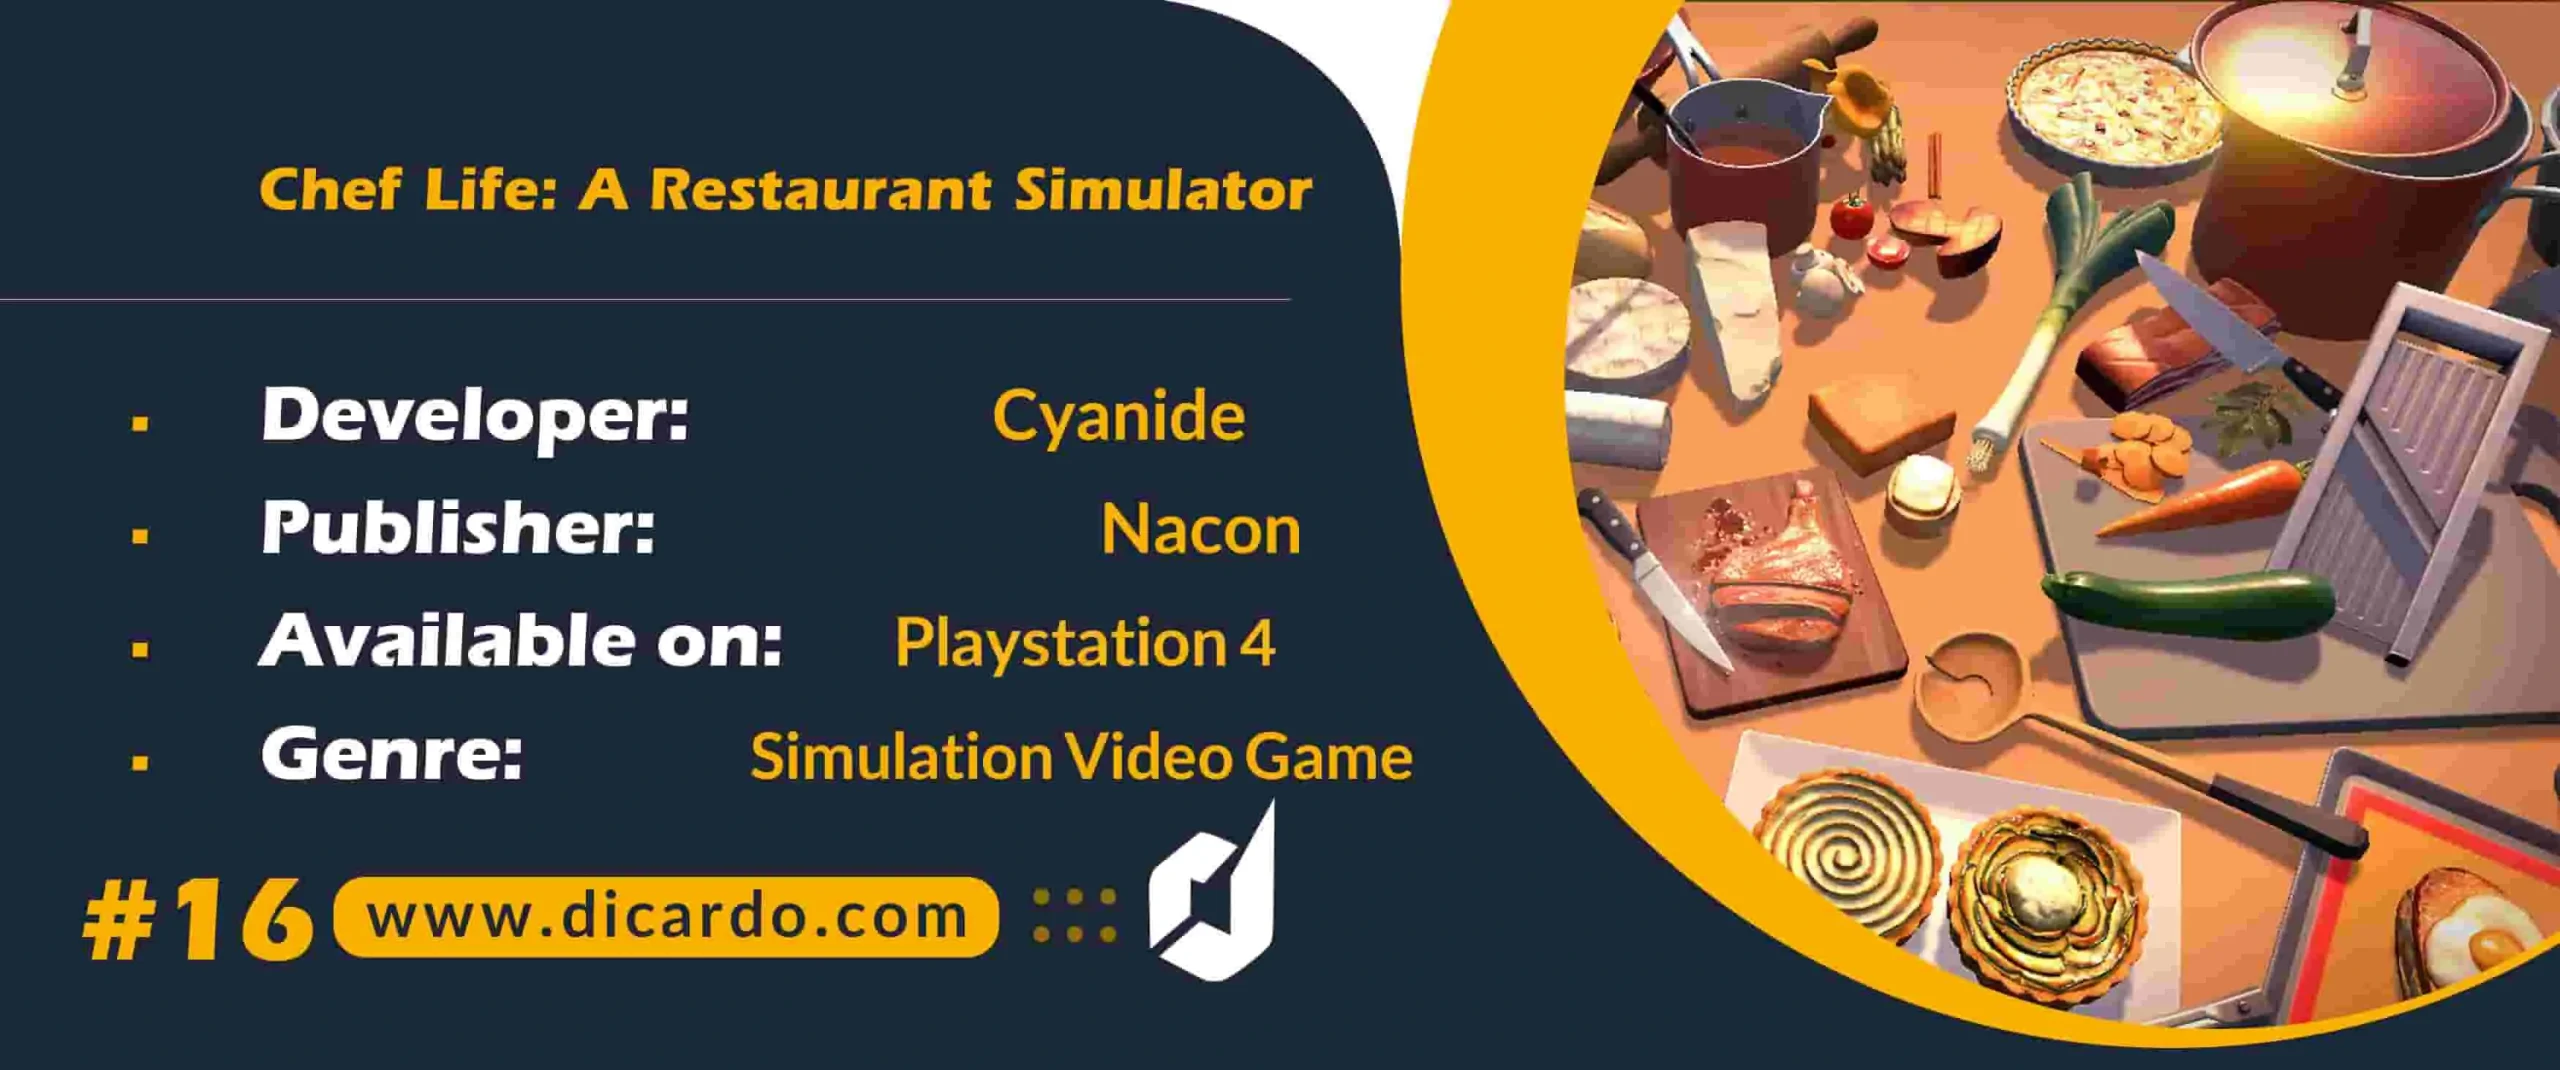 #16 چف لایف ا رستورانت سیمولیشر Chef Life: A Restaurant Simulator